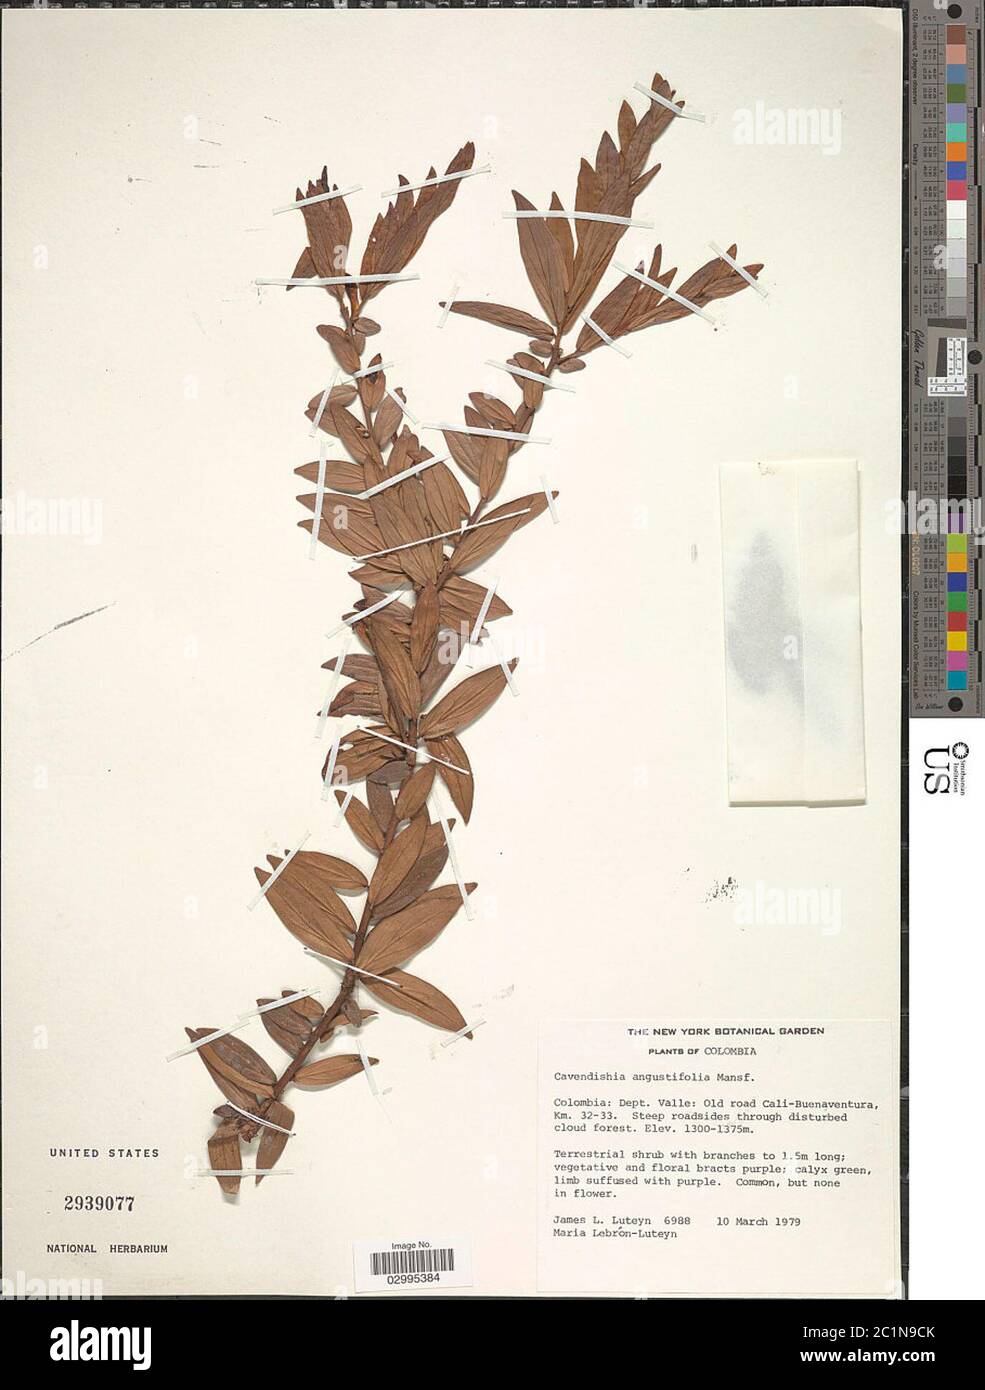 Cavendishia angustifolia Mansf Cavendishia angustifolia Mansf. Stock Photo